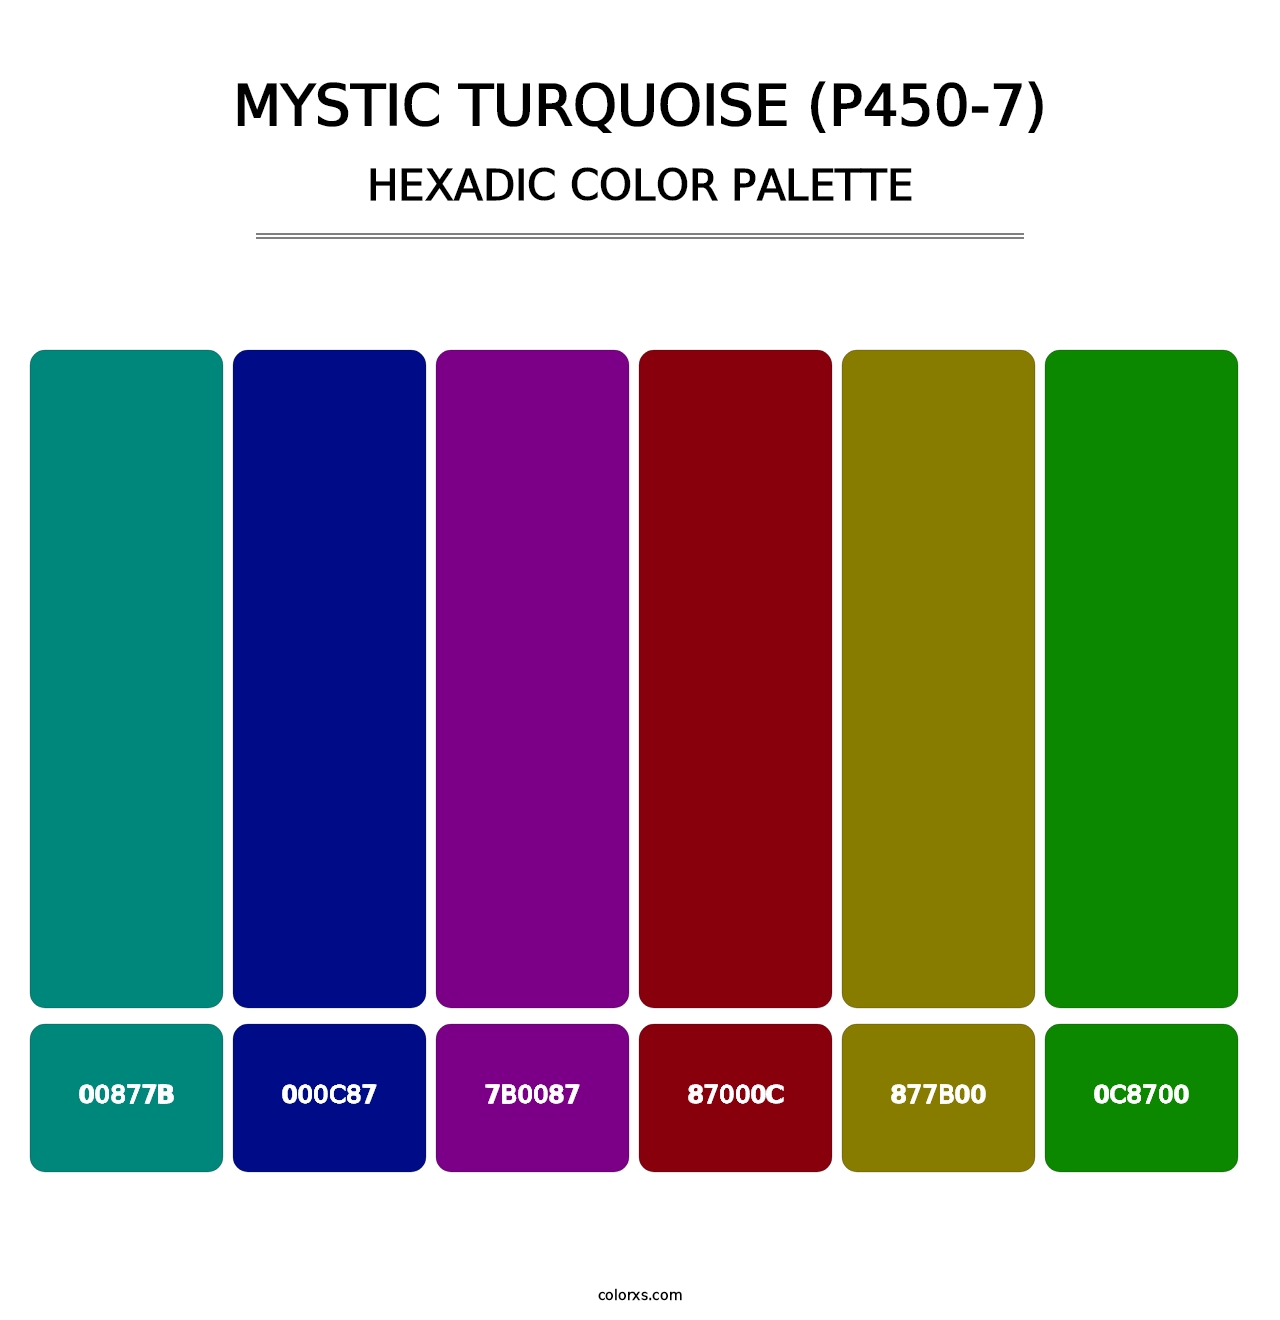 Mystic Turquoise (P450-7) - Hexadic Color Palette